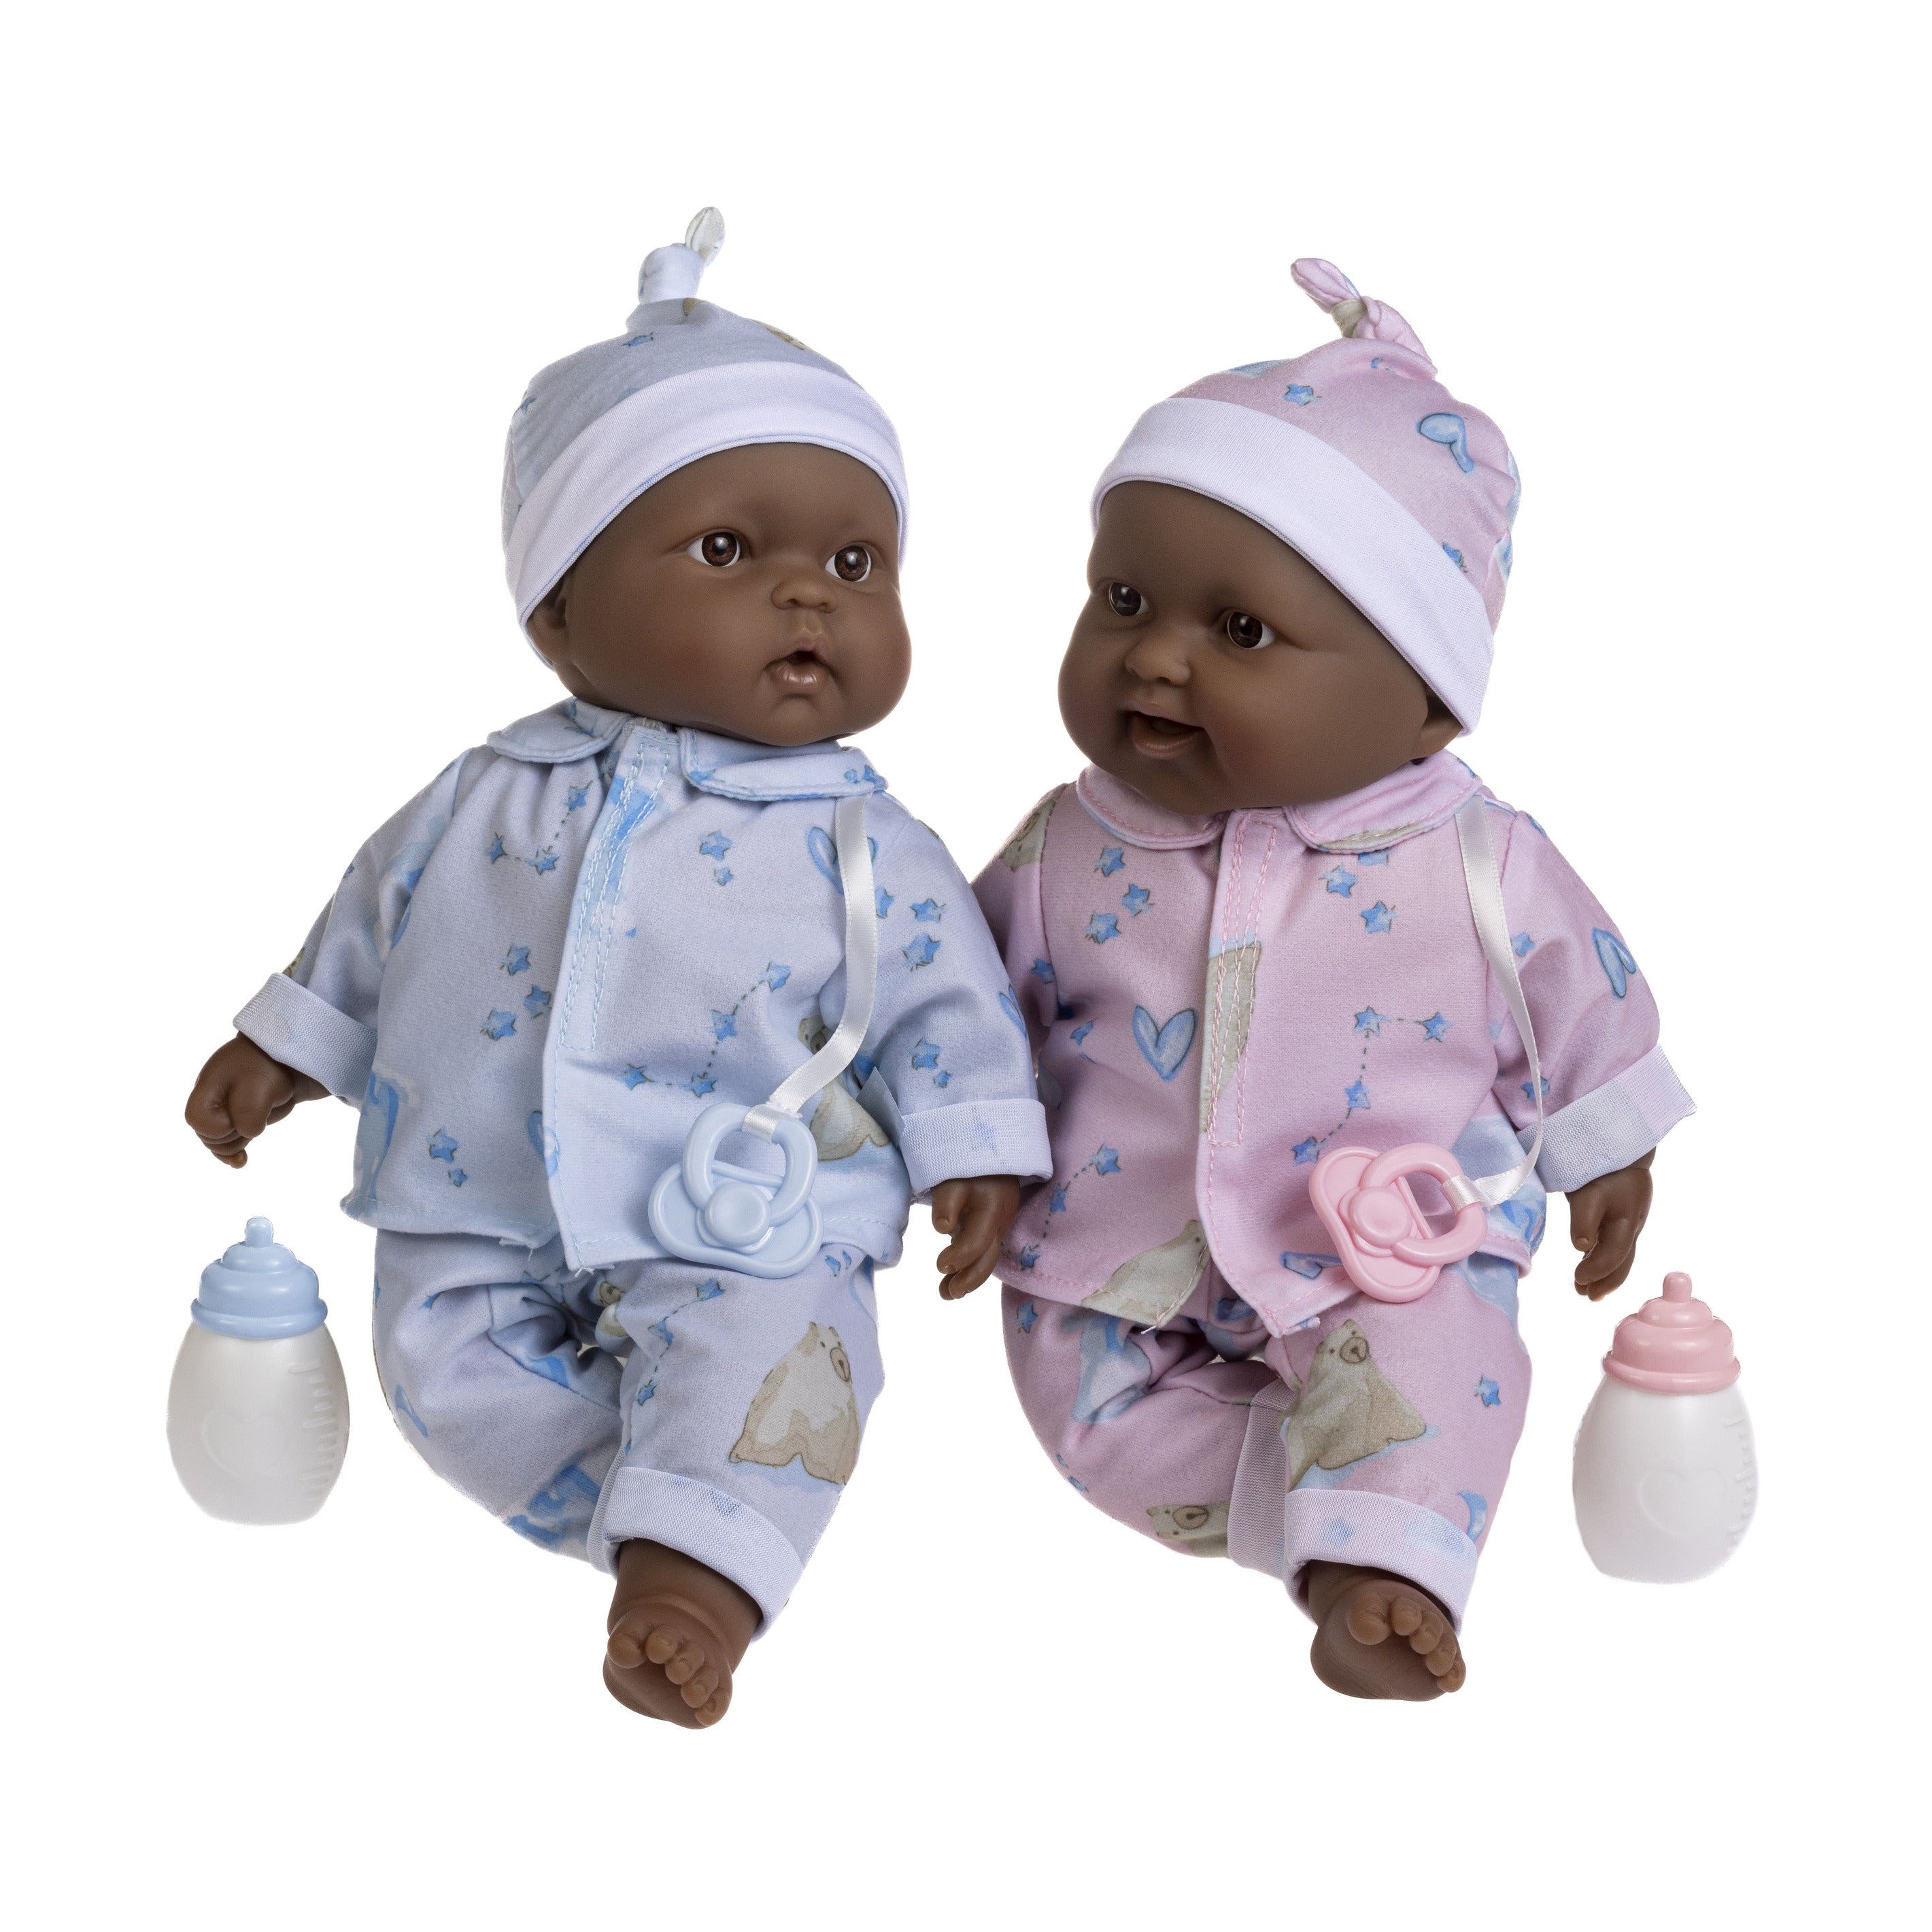 Soft Body Baby Dolls | 20 inches Dolls African American | Plush